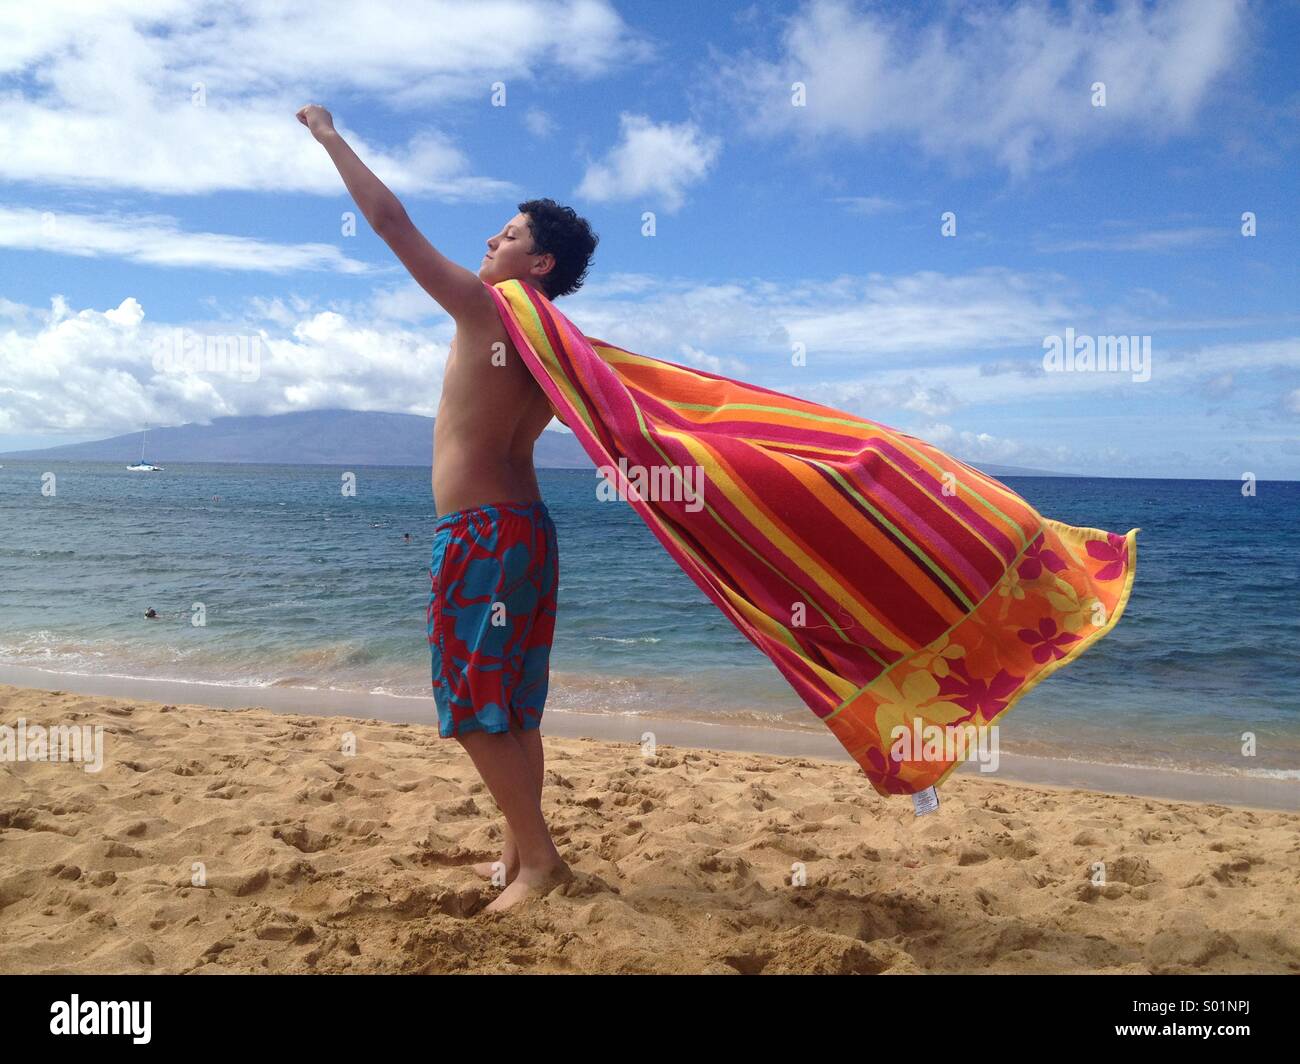 Boy, aged 12, playing with beach towel, Hawaii Stock Photo